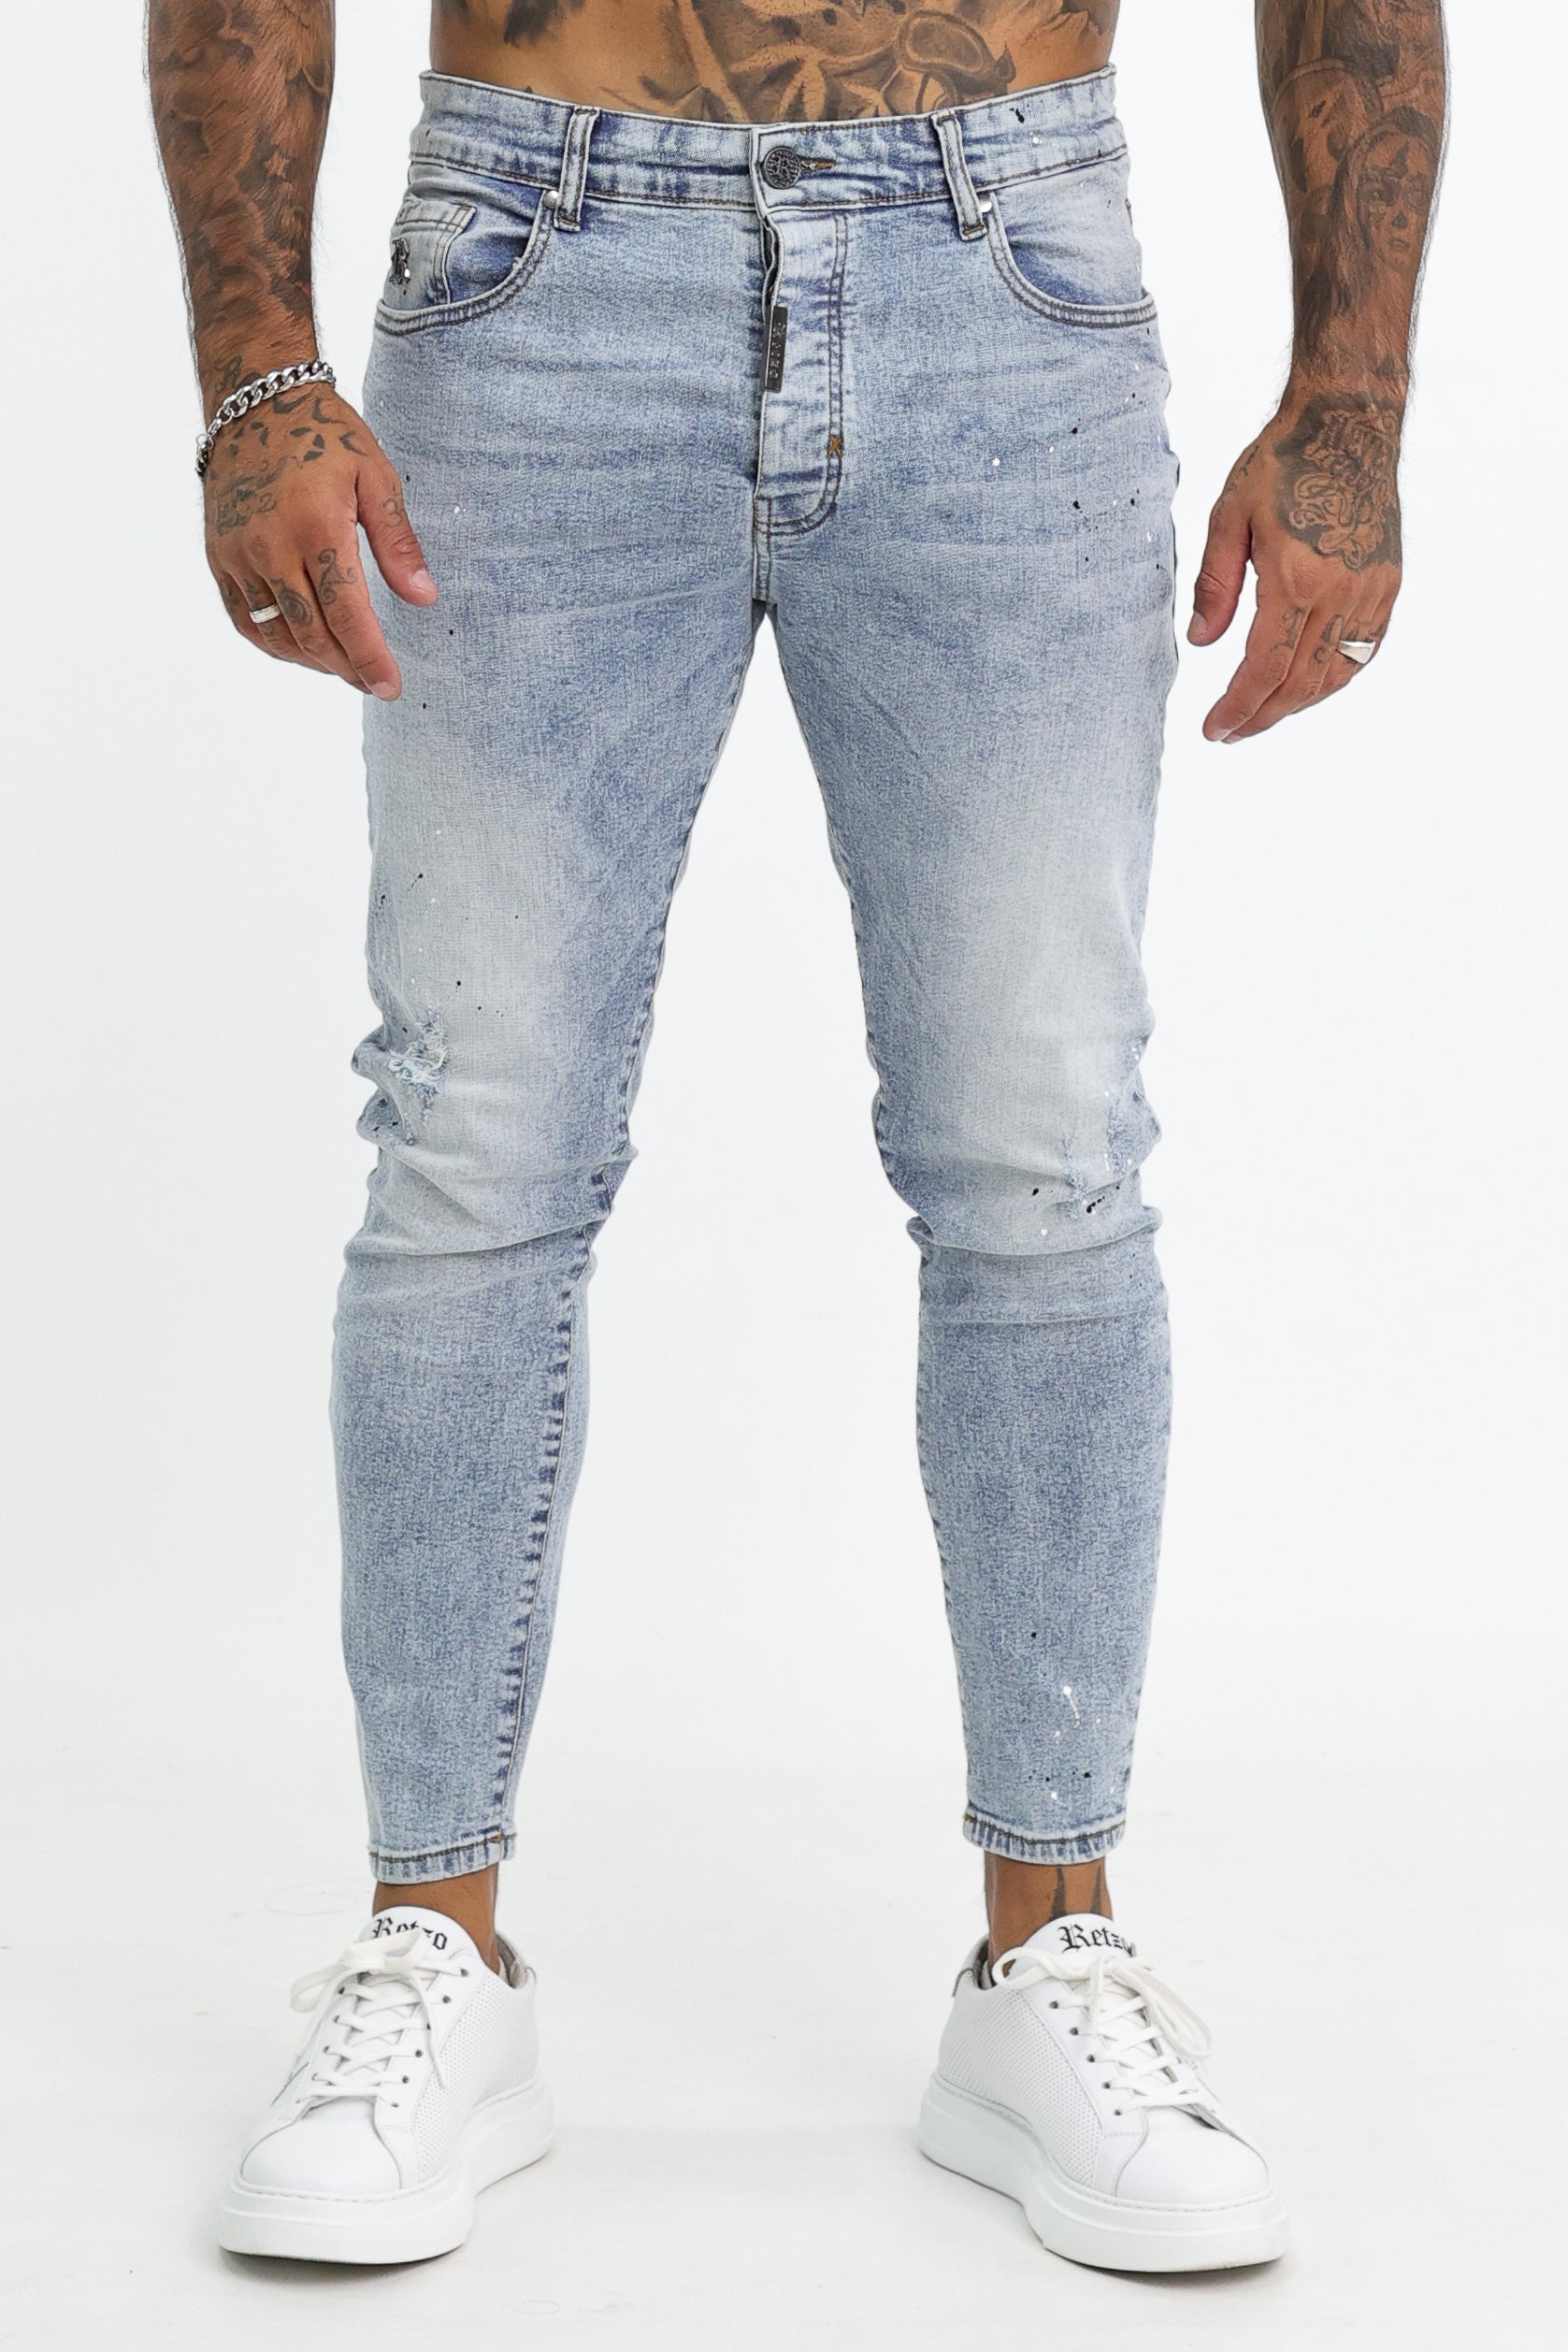 Aquino Jeans